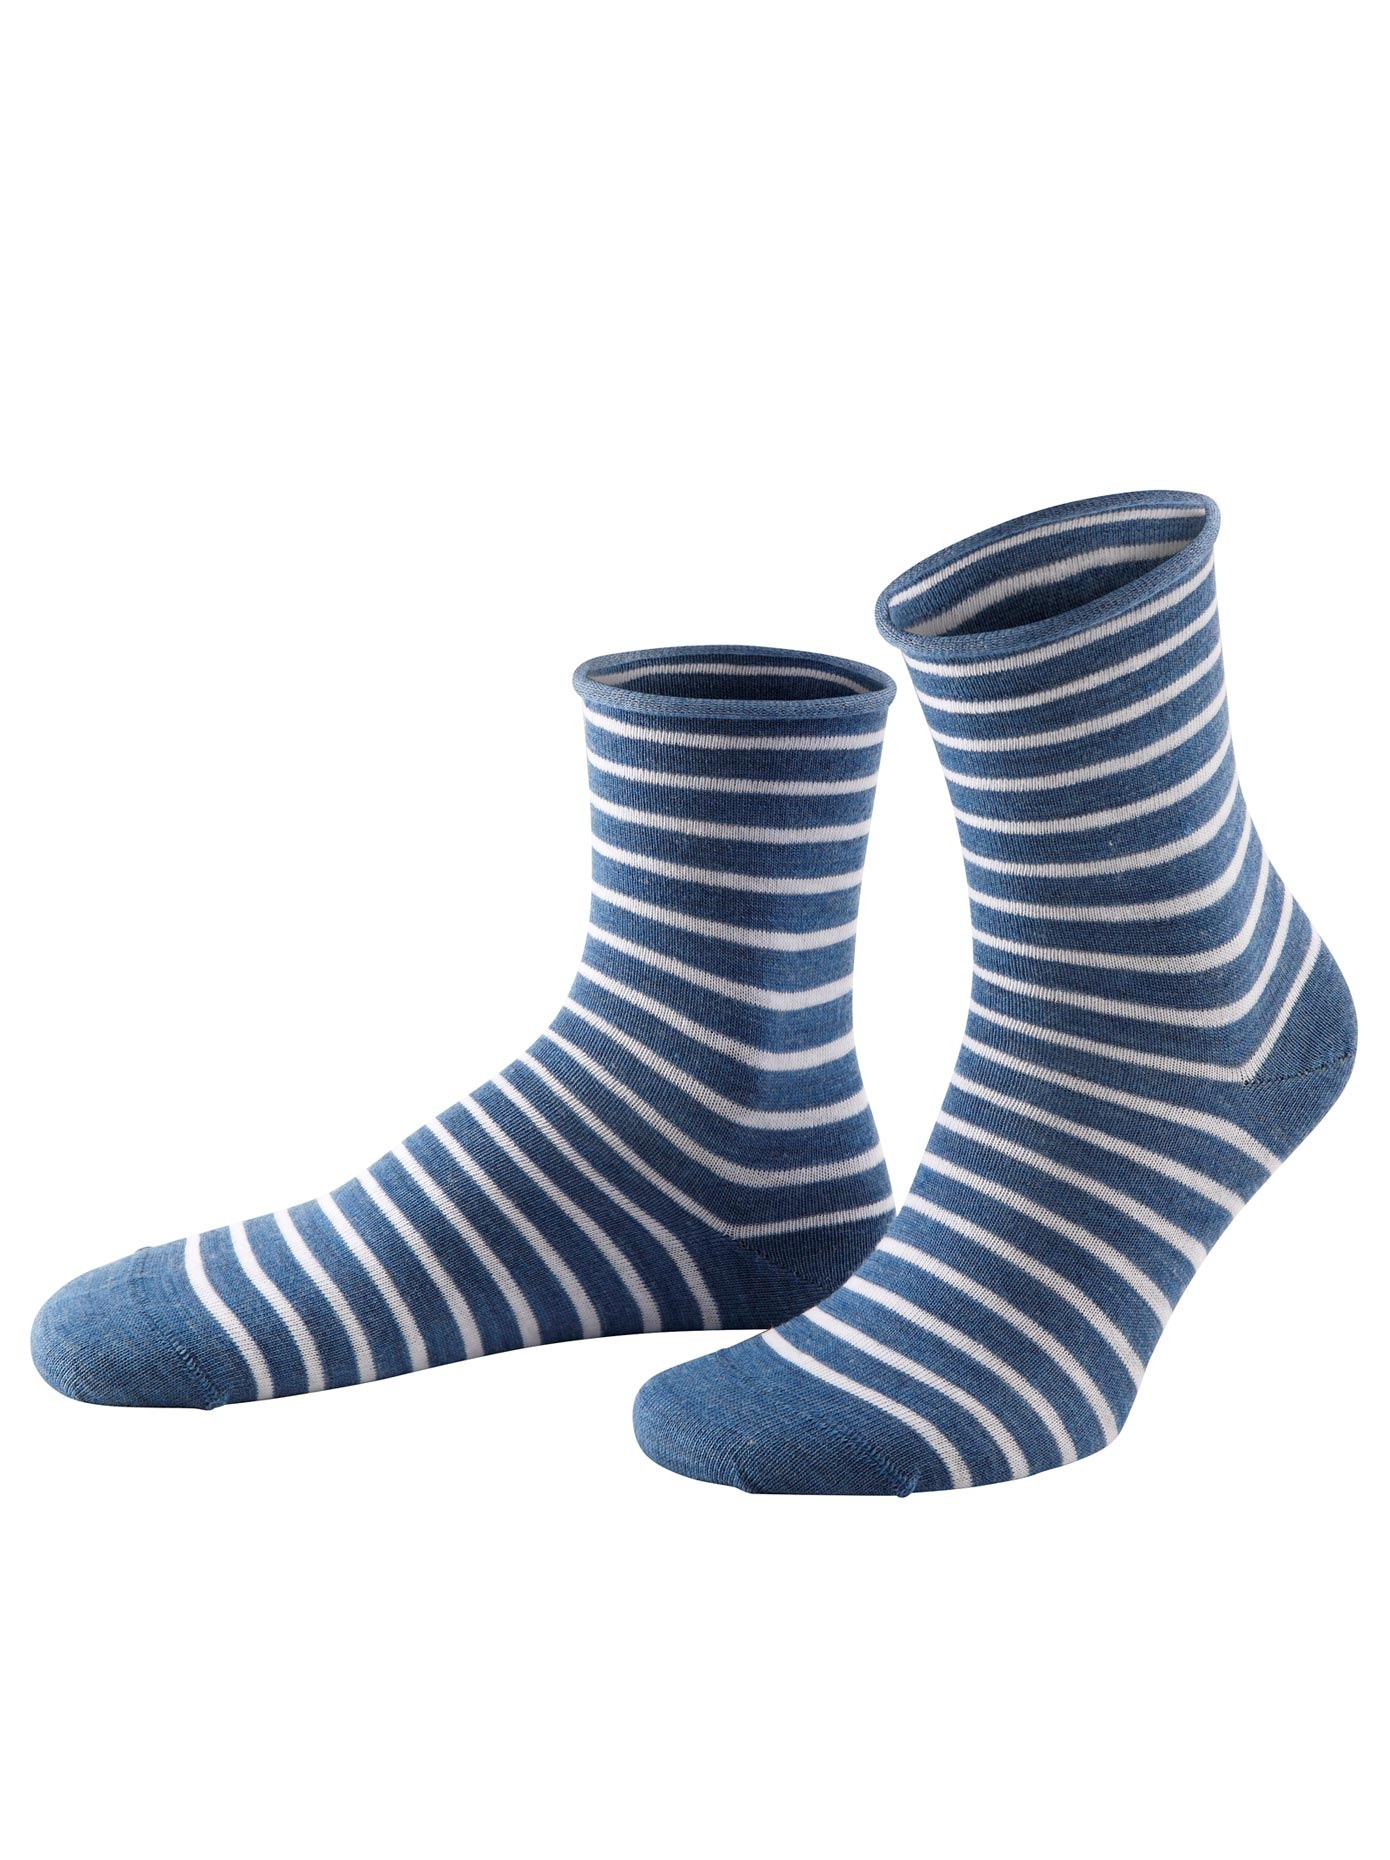 Paar) Socken wäschepur (4